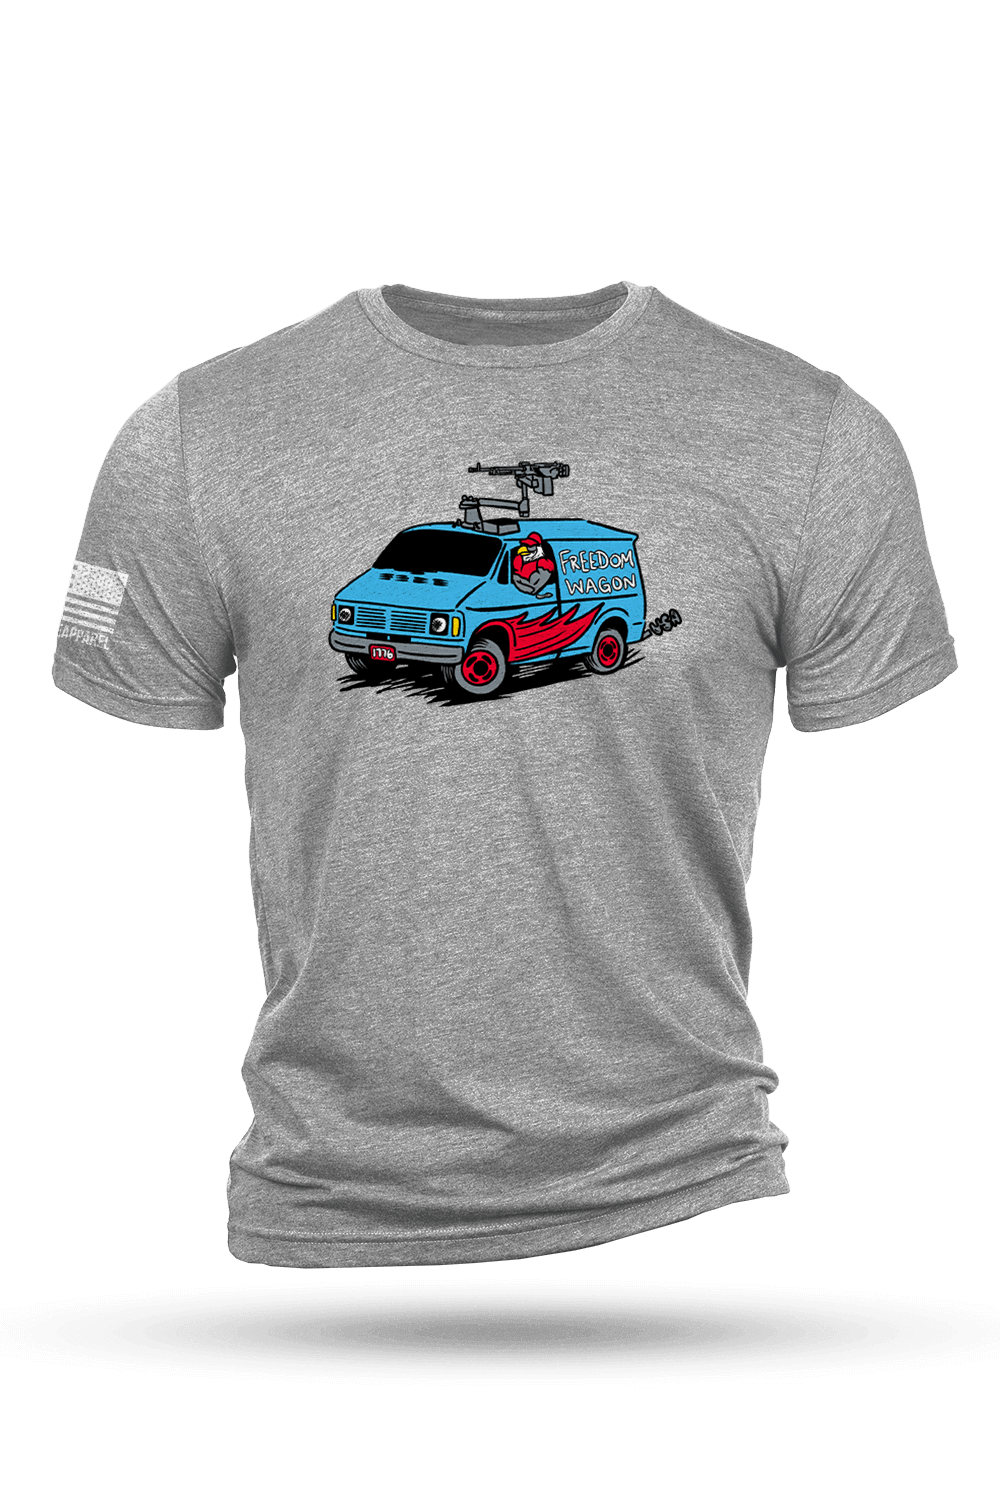 T - Shirt - Freedom Wagon